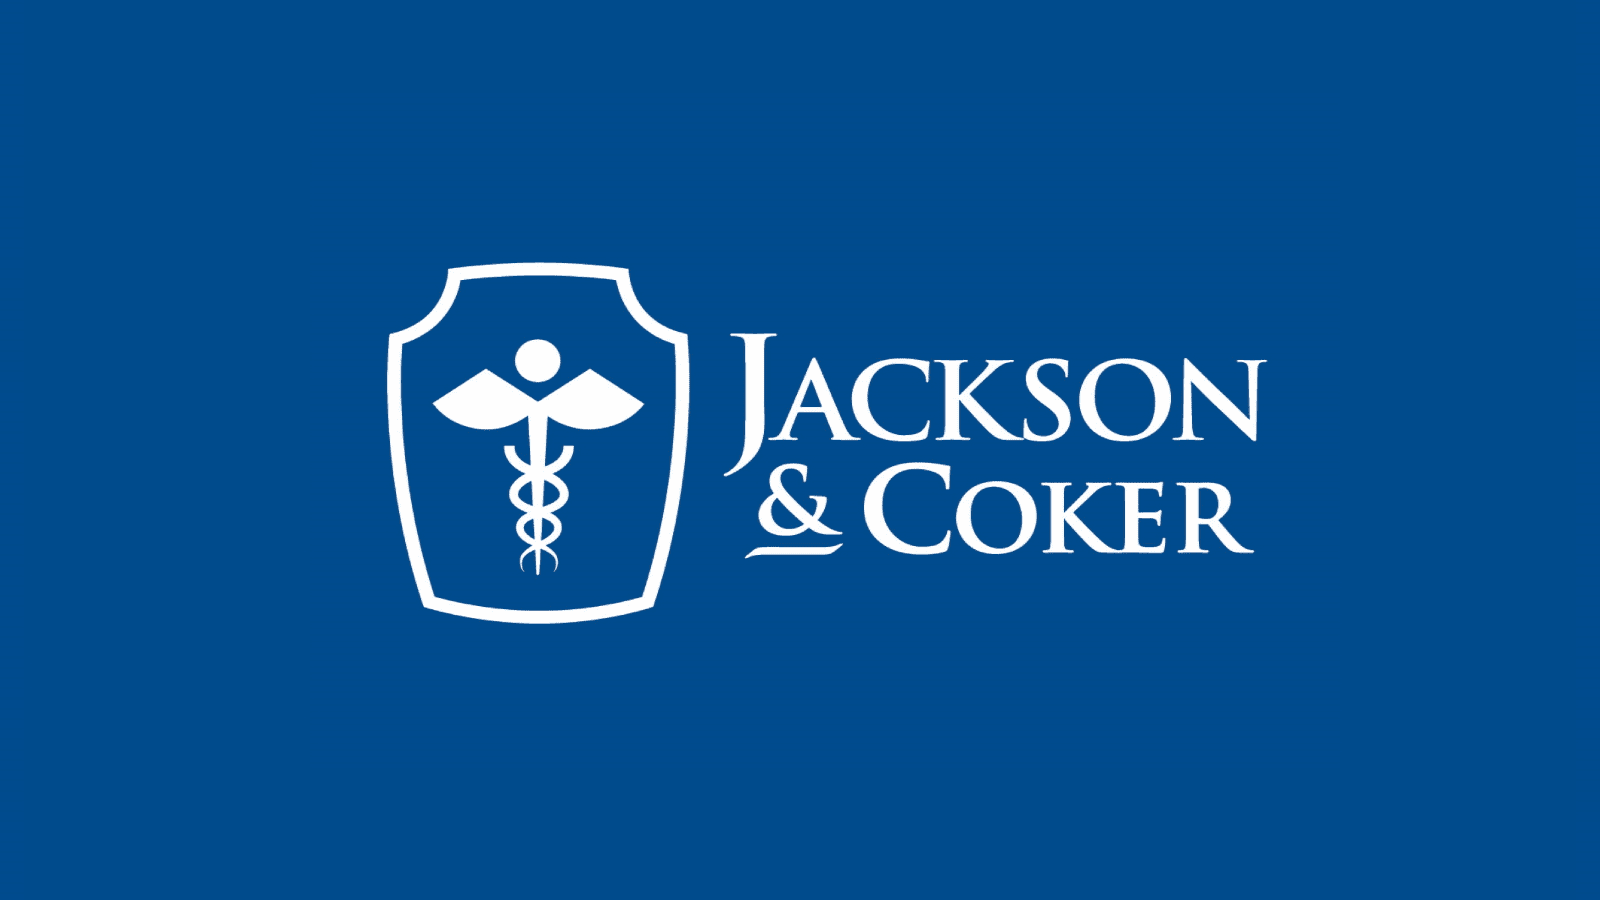 Jackson coker